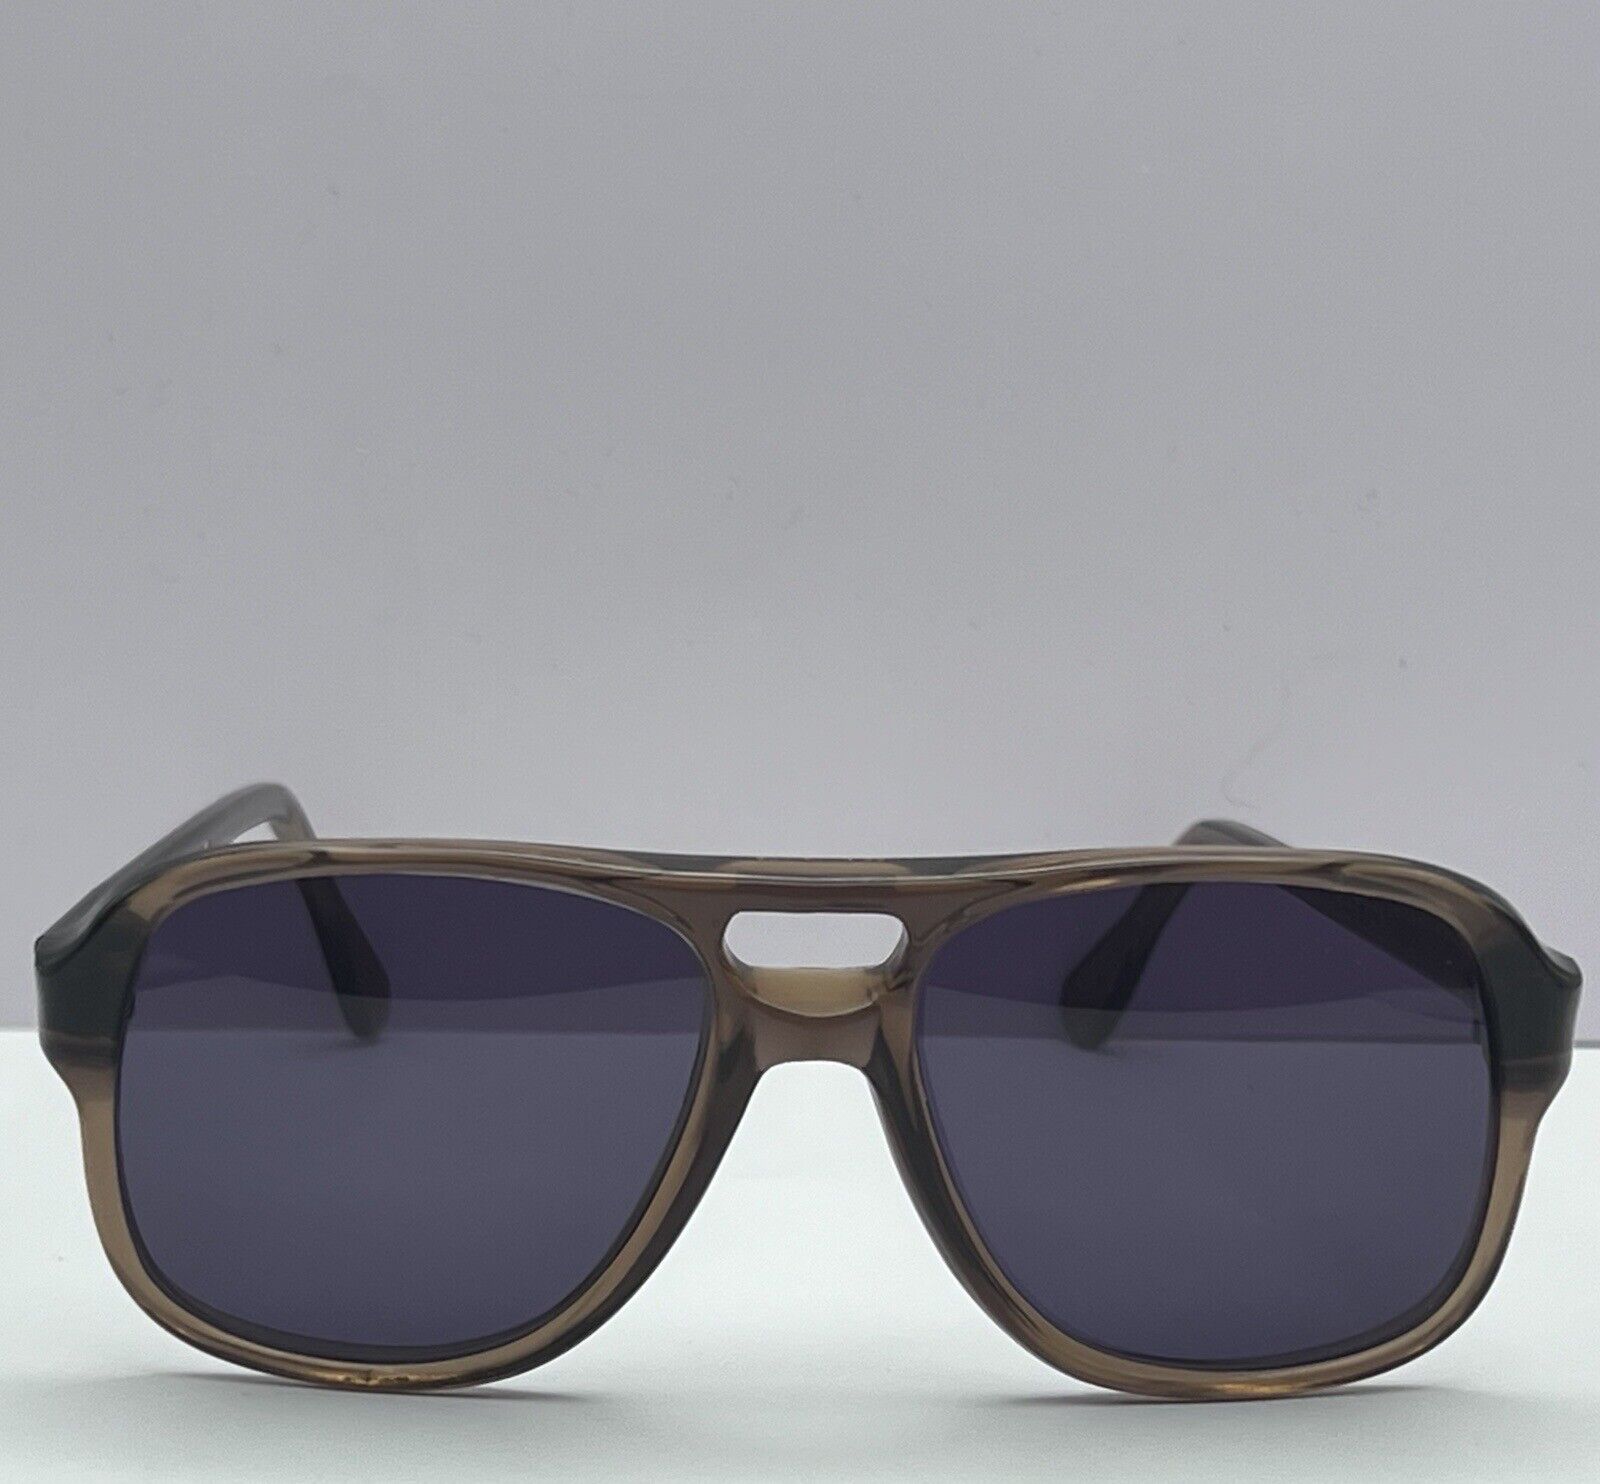 Vintage PROTECTIVE Frames W/ NEW CUSTOM “BERKOS DESIGNS” Lenses Added-Sunglasses